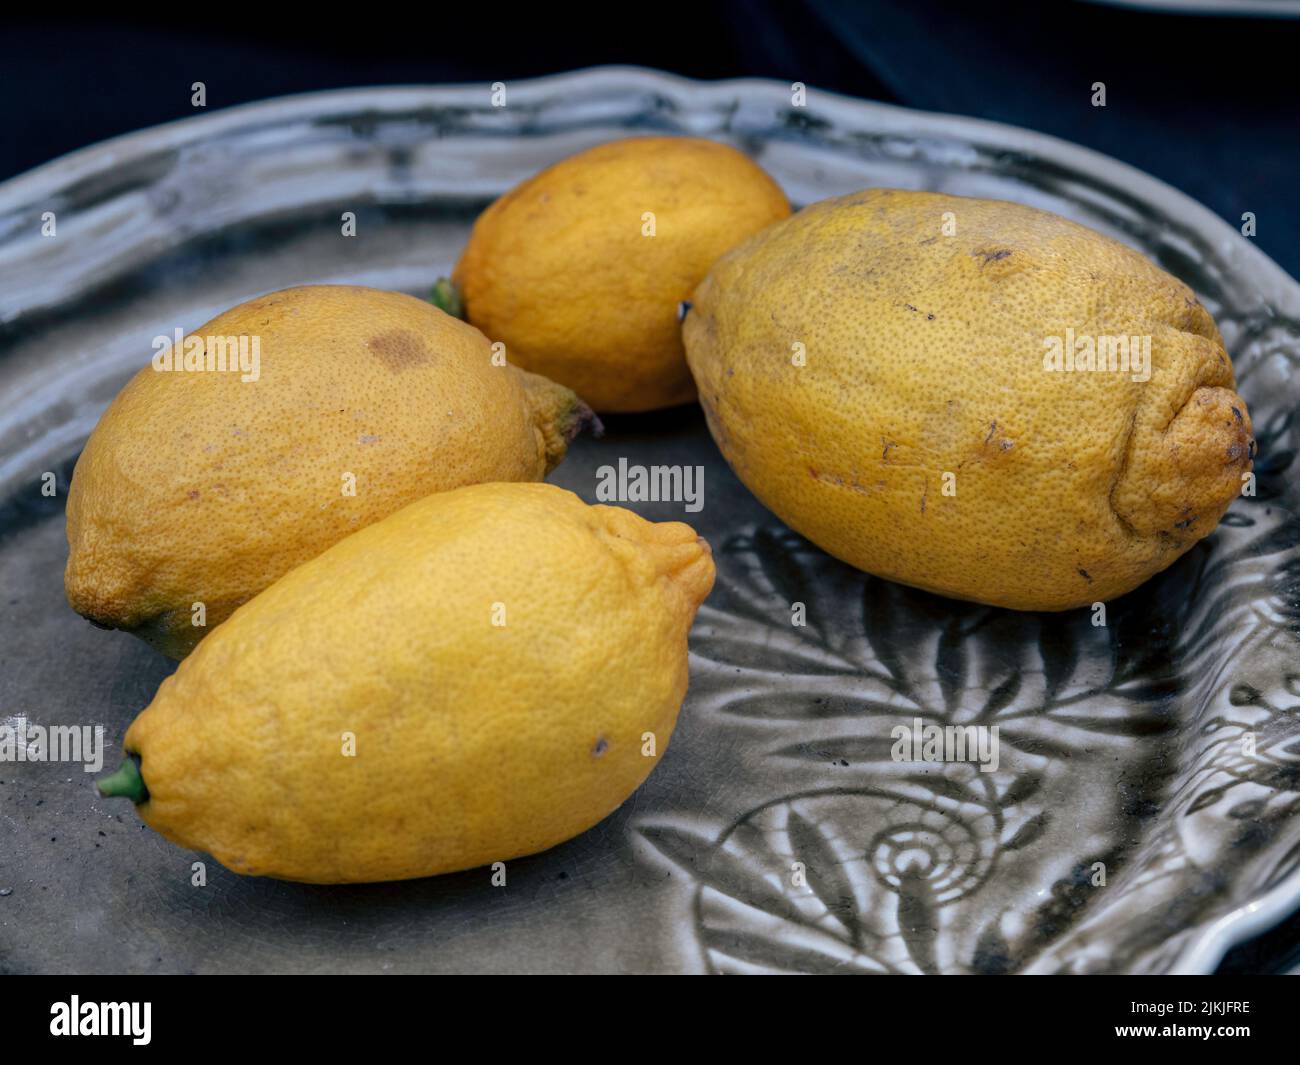 A closeup of four lemons on a decorative plate Stock Photo